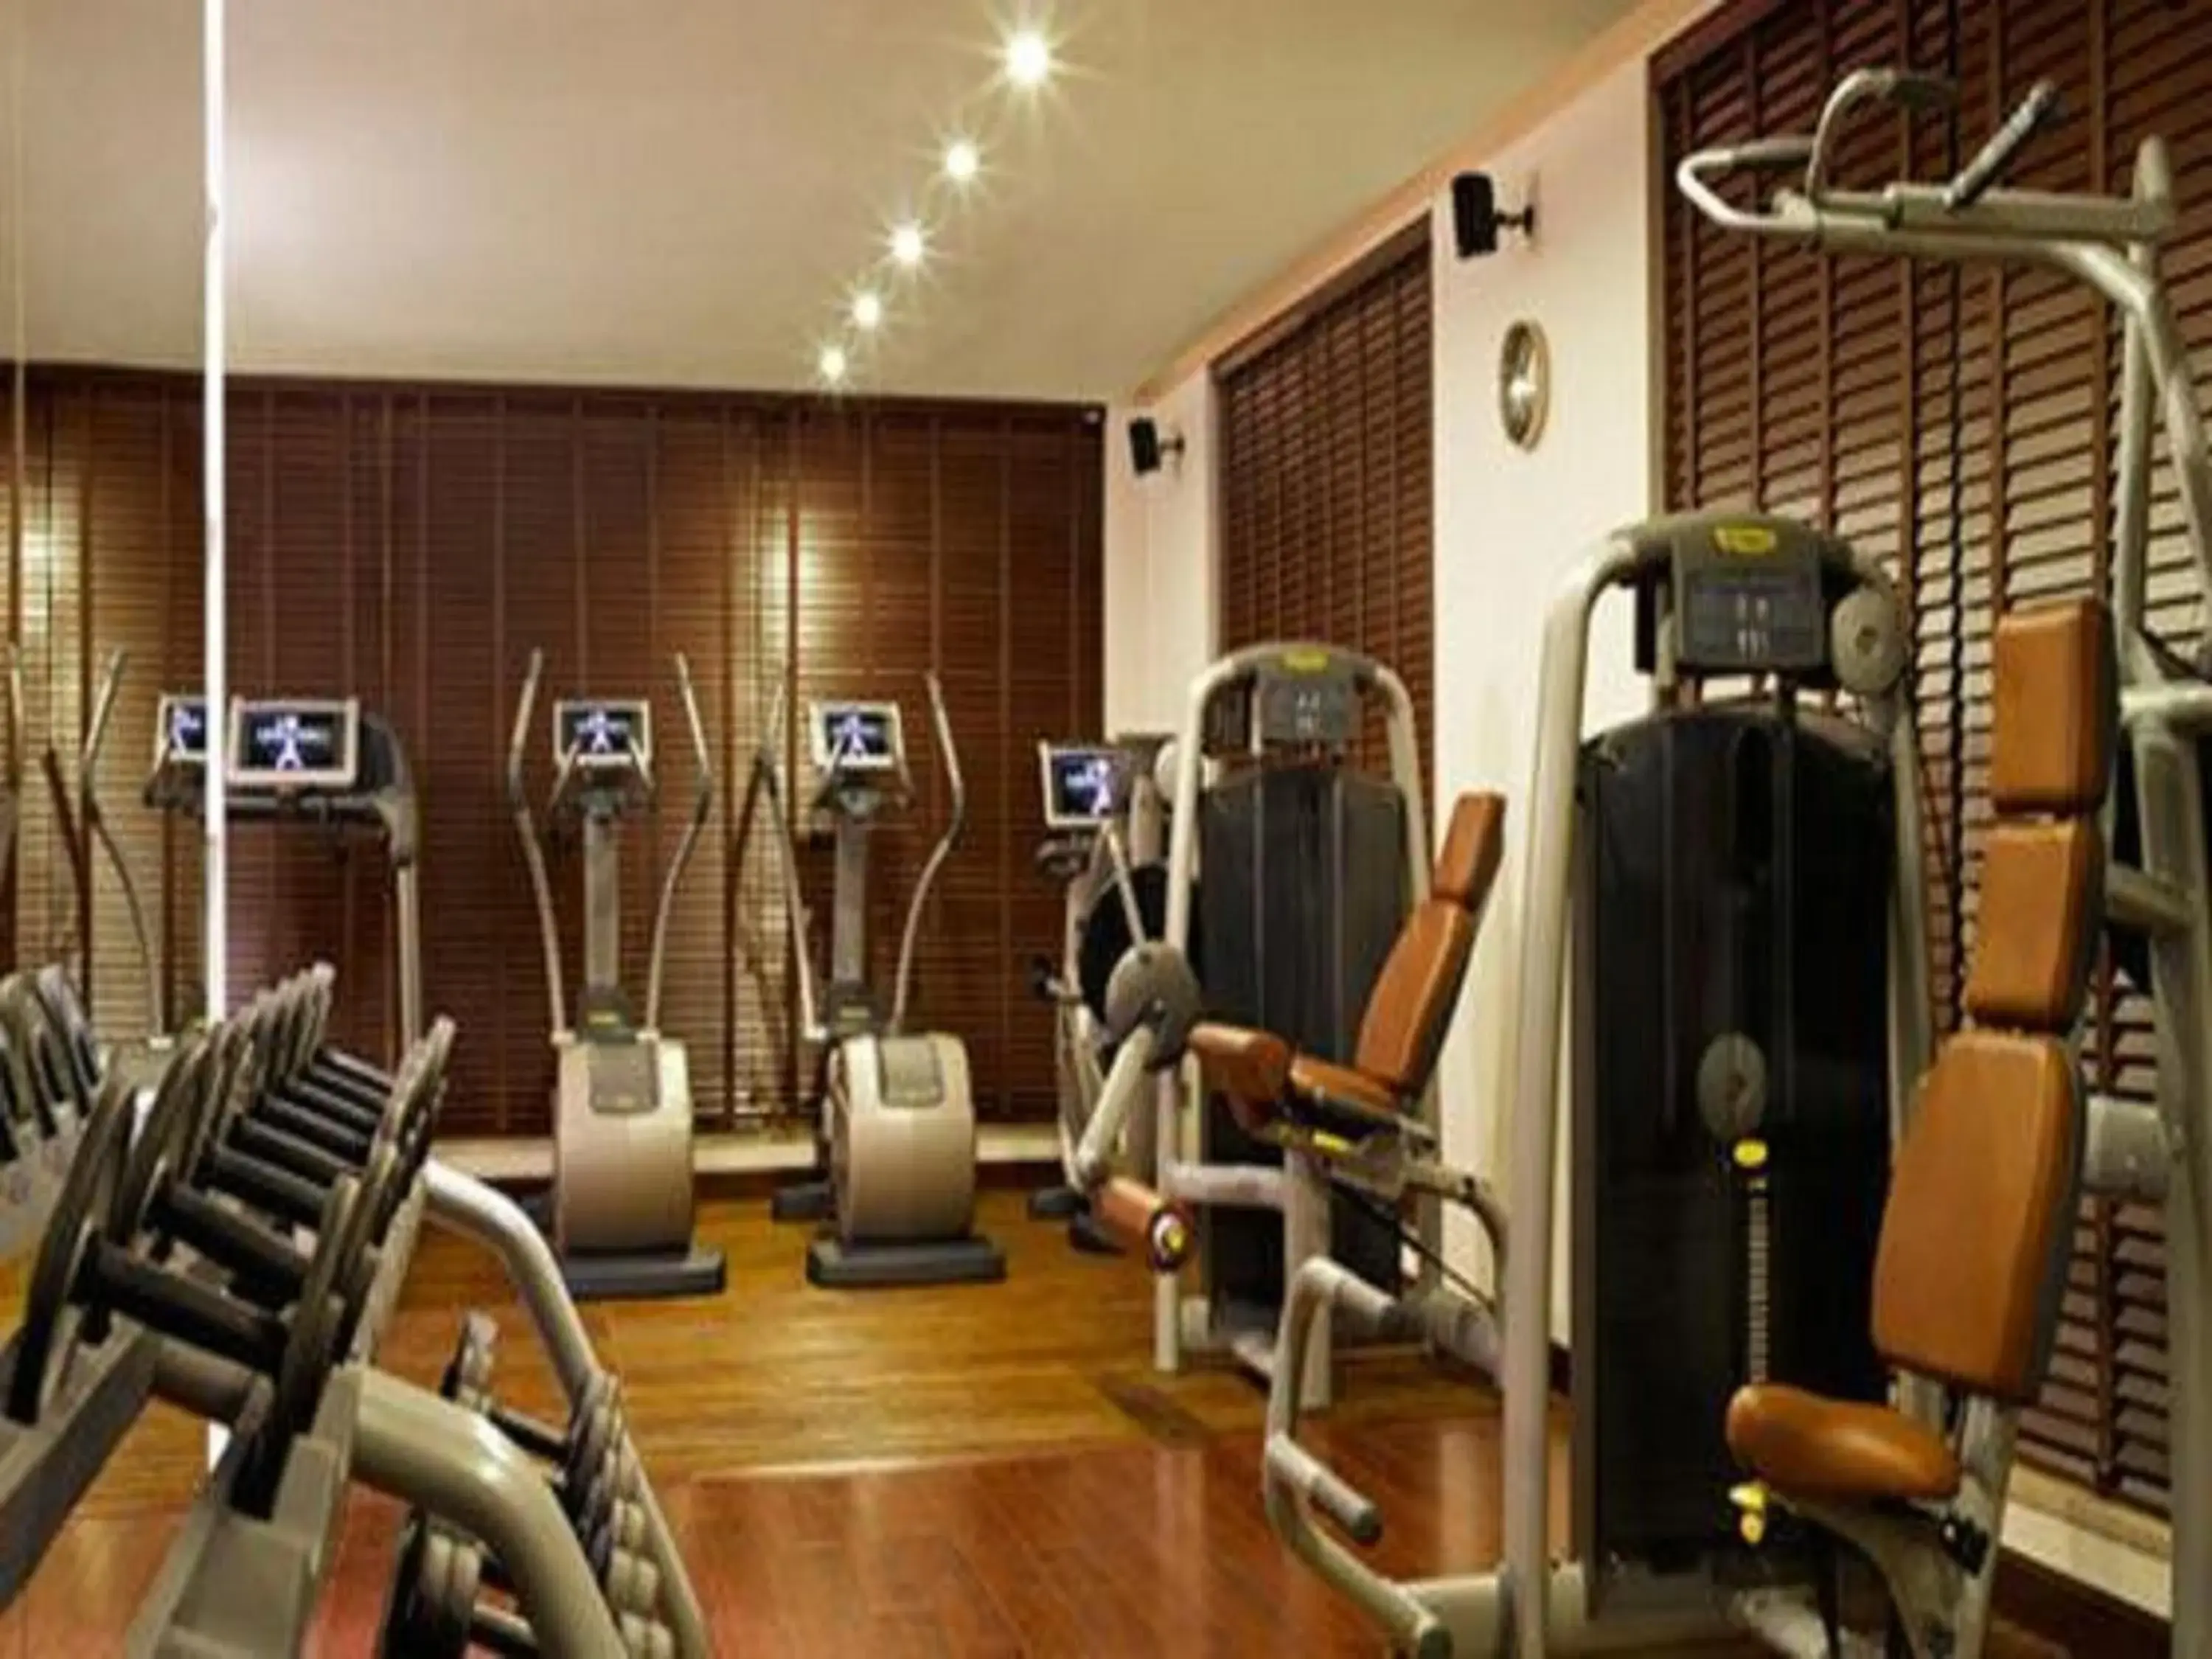 Fitness centre/facilities, Fitness Center/Facilities in Oxford Golf Resort